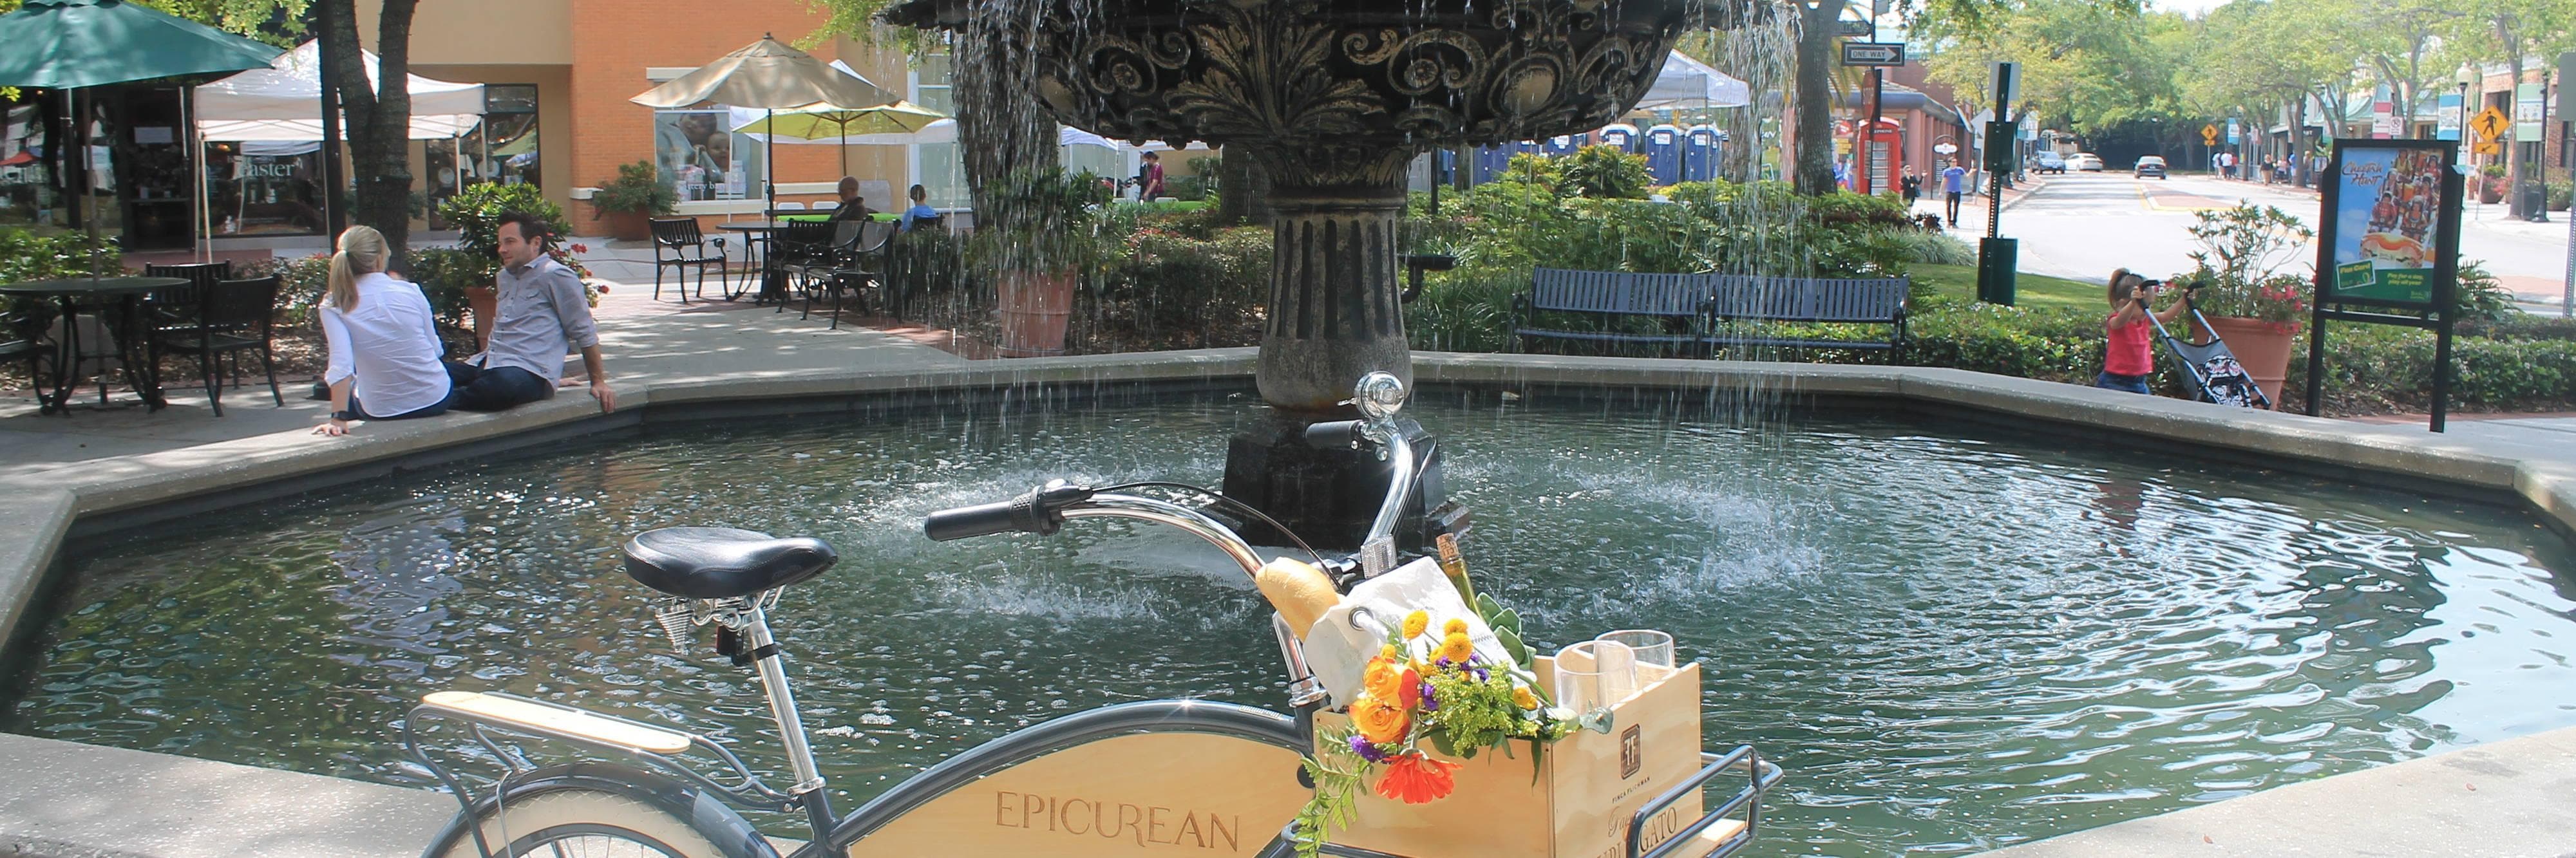 Epicurean Biking - Hyde Park Village Fountain